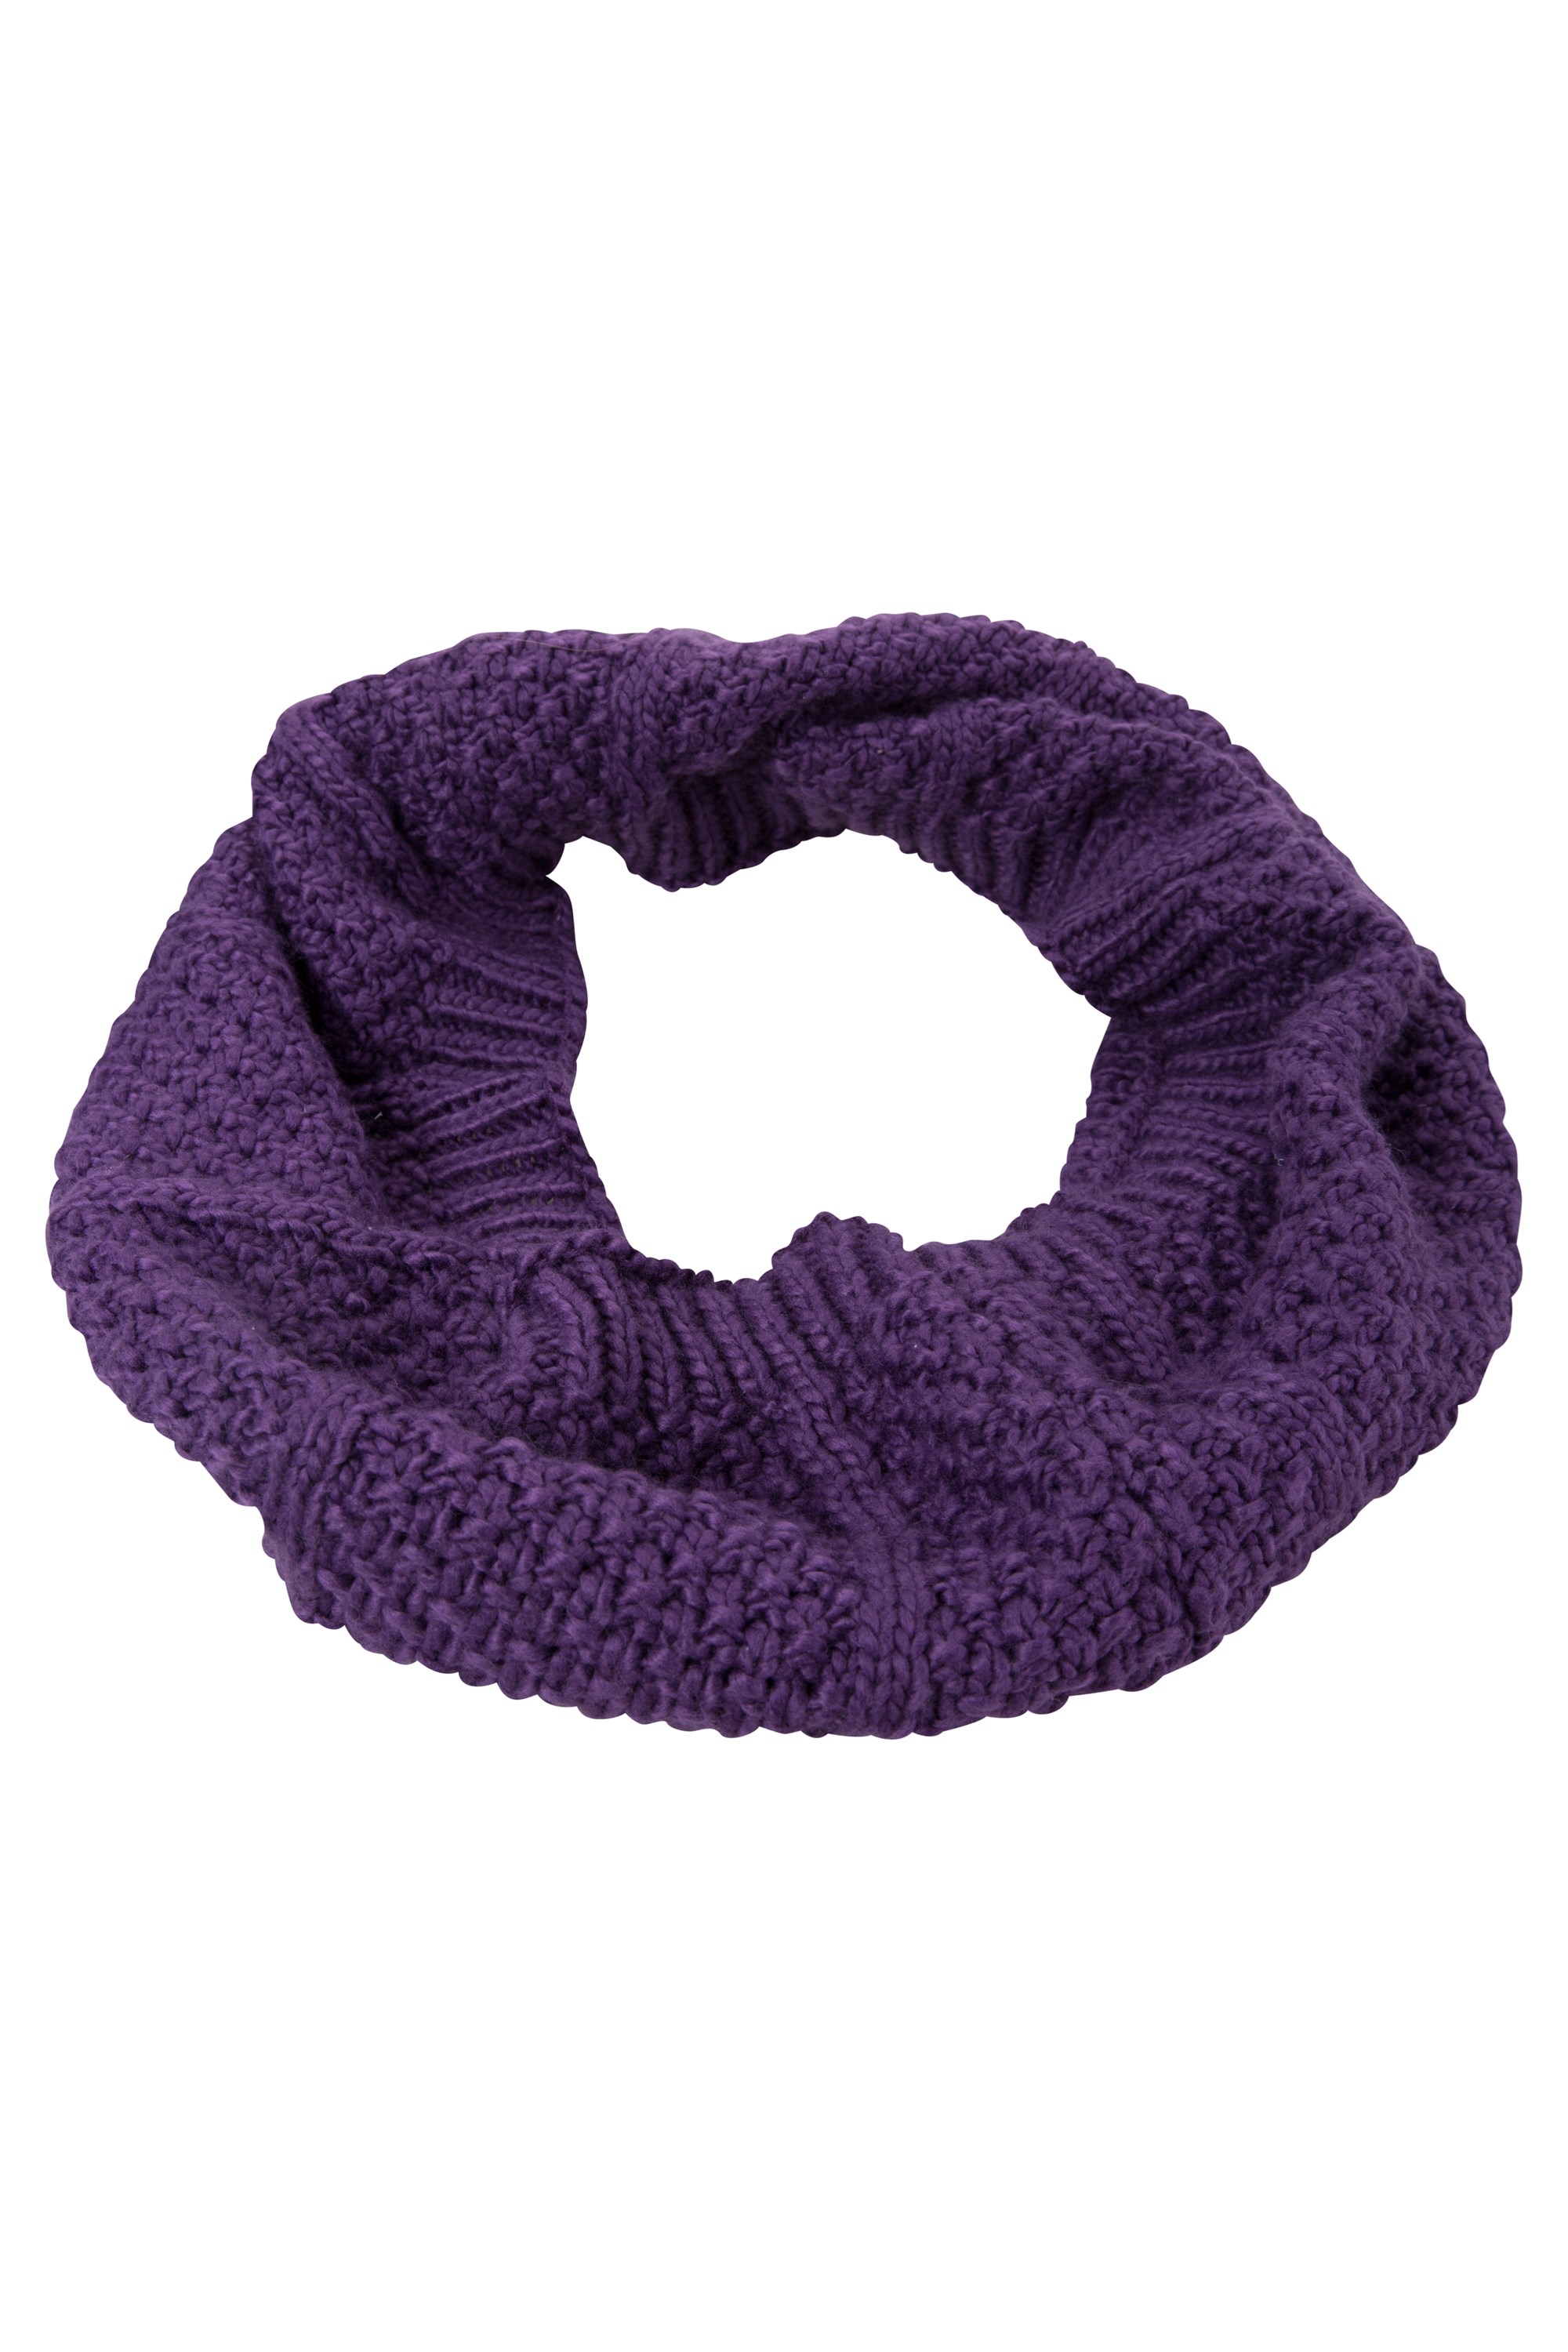 Mountain Warehouse Alaska Knitted Womens Snood Purple